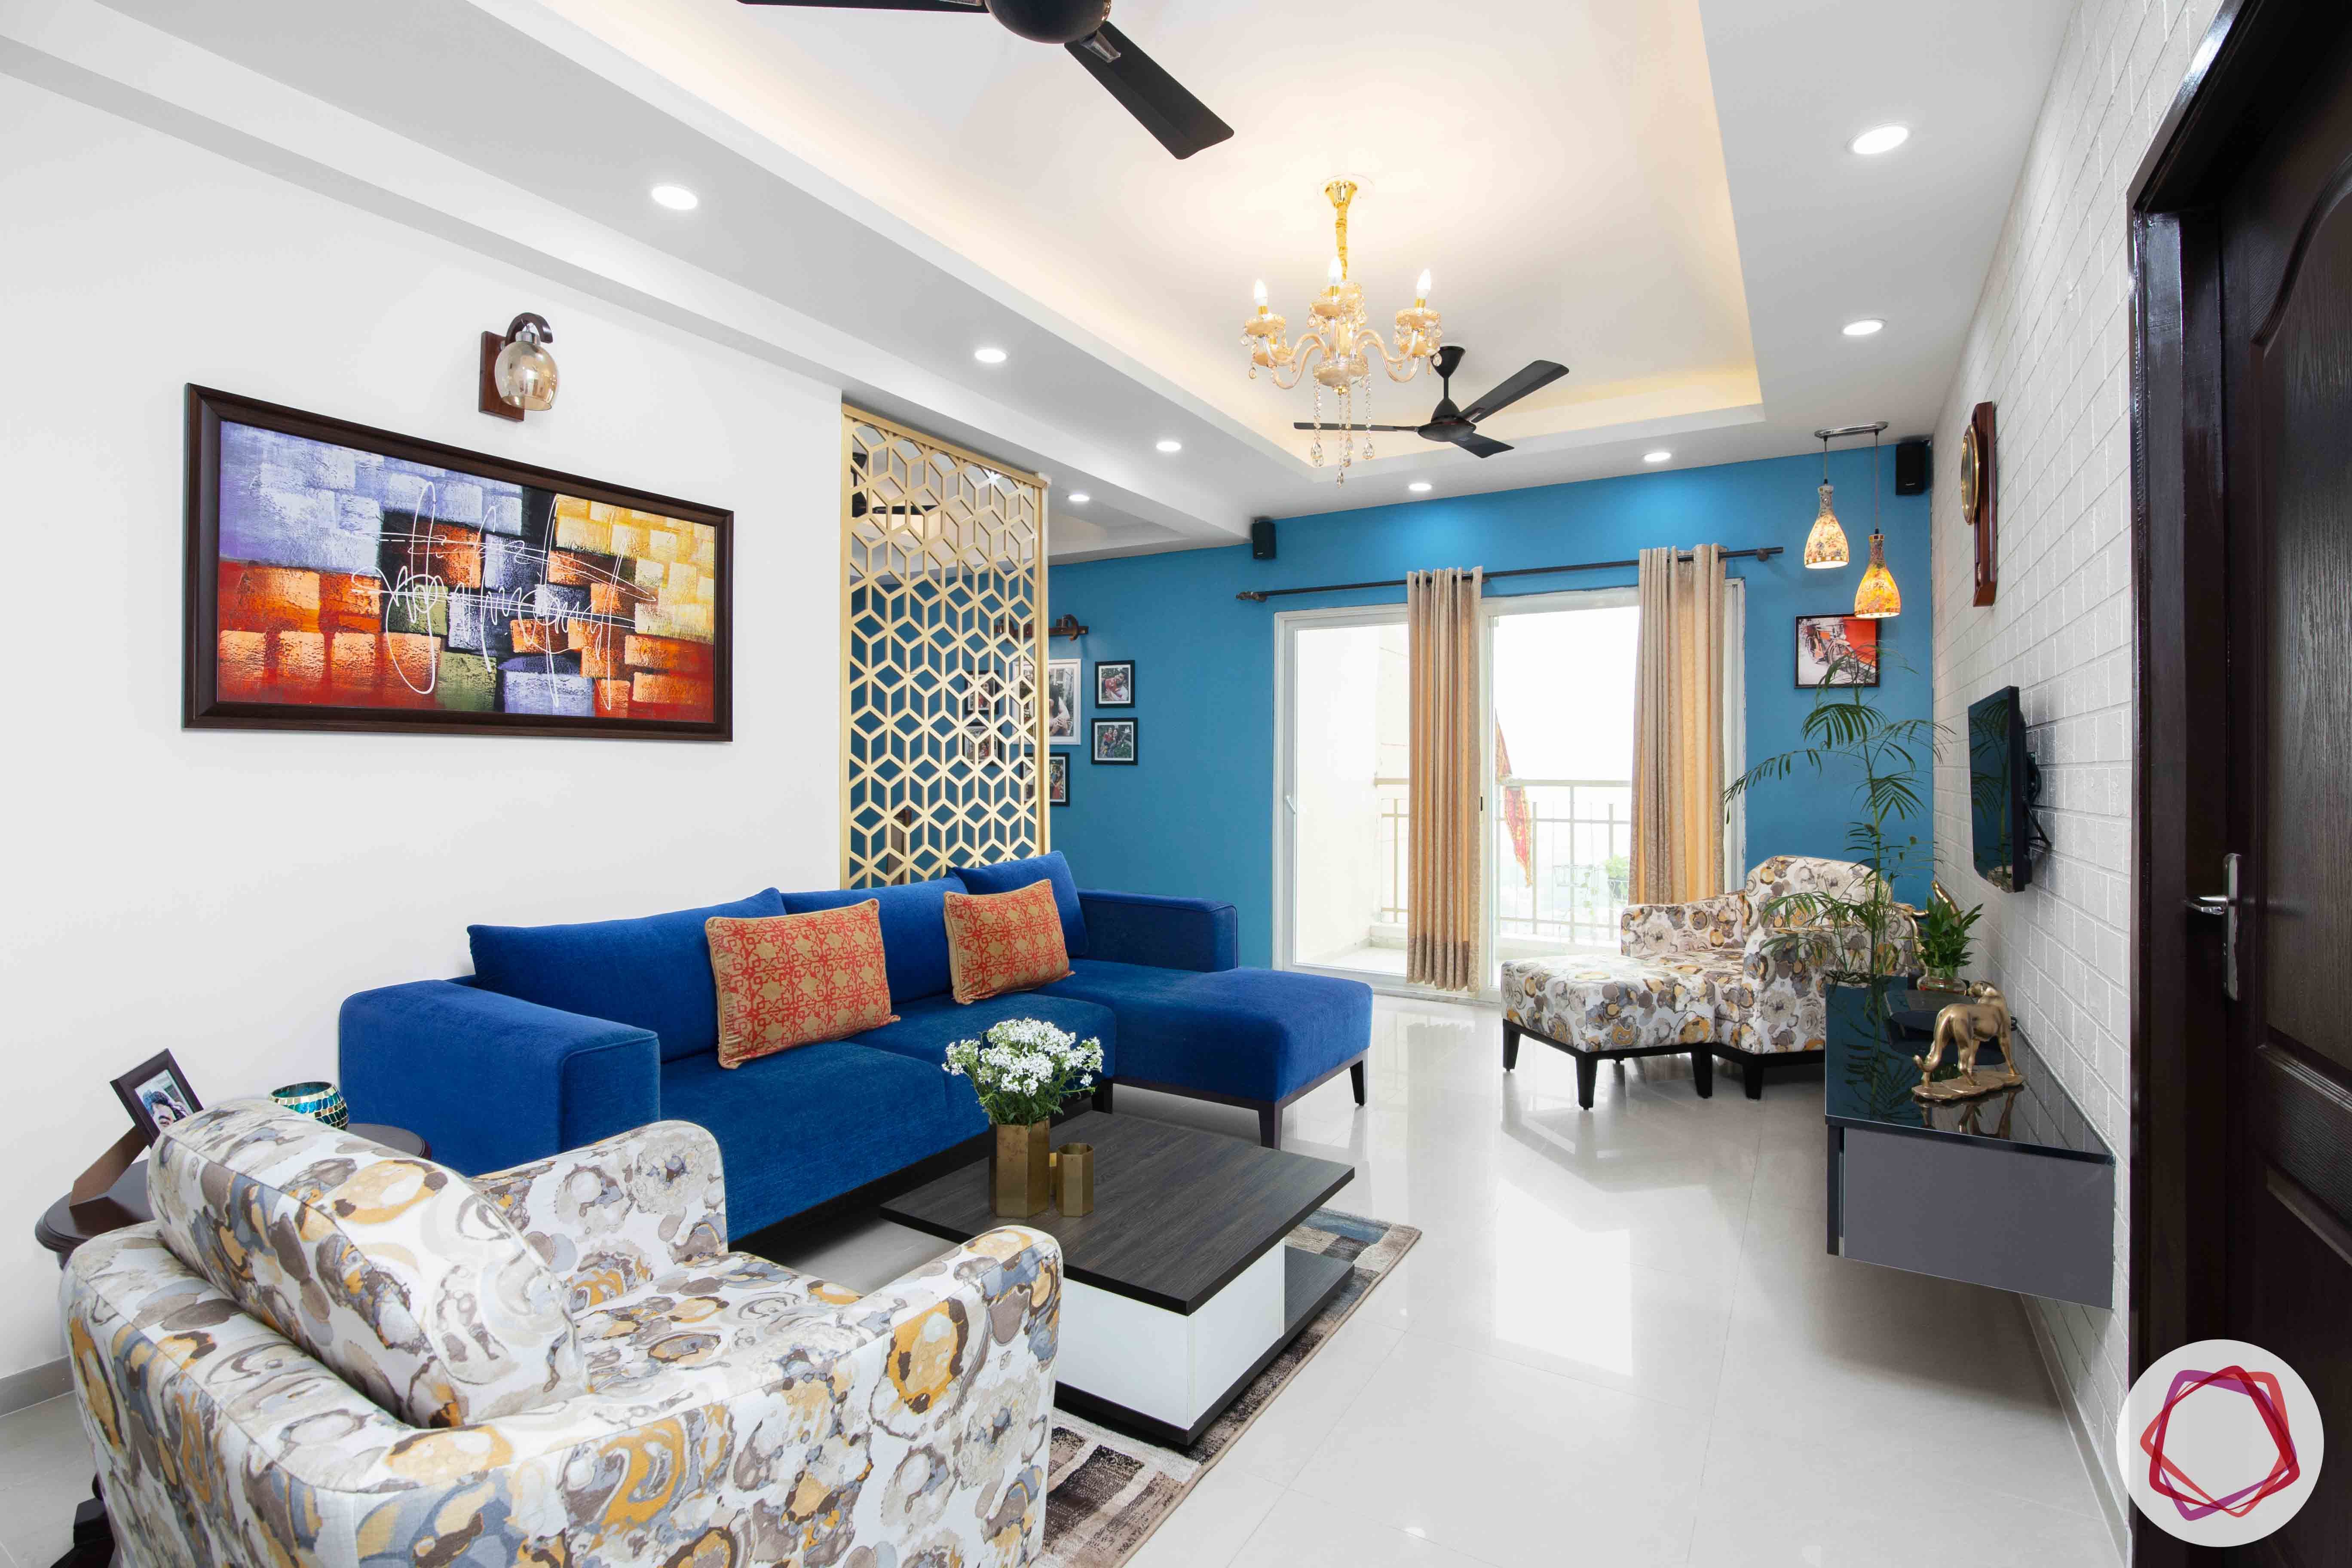 3bhk flat interior design-blue sofa design-l-shaped sofa designs-jaali partition designs